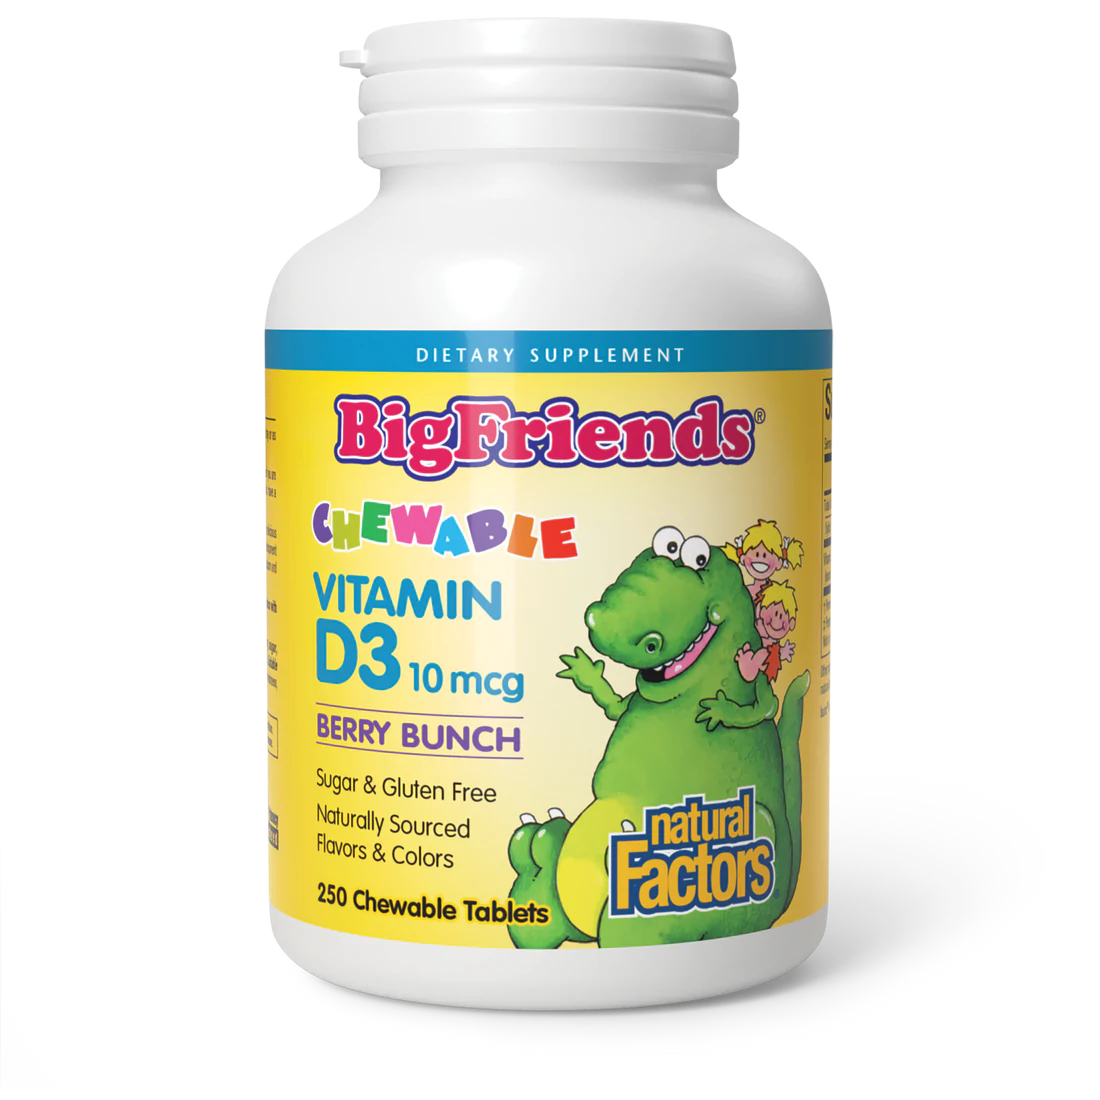 BigFriends Vitamin D3 for Kids by Natural Factors, 250 tablets